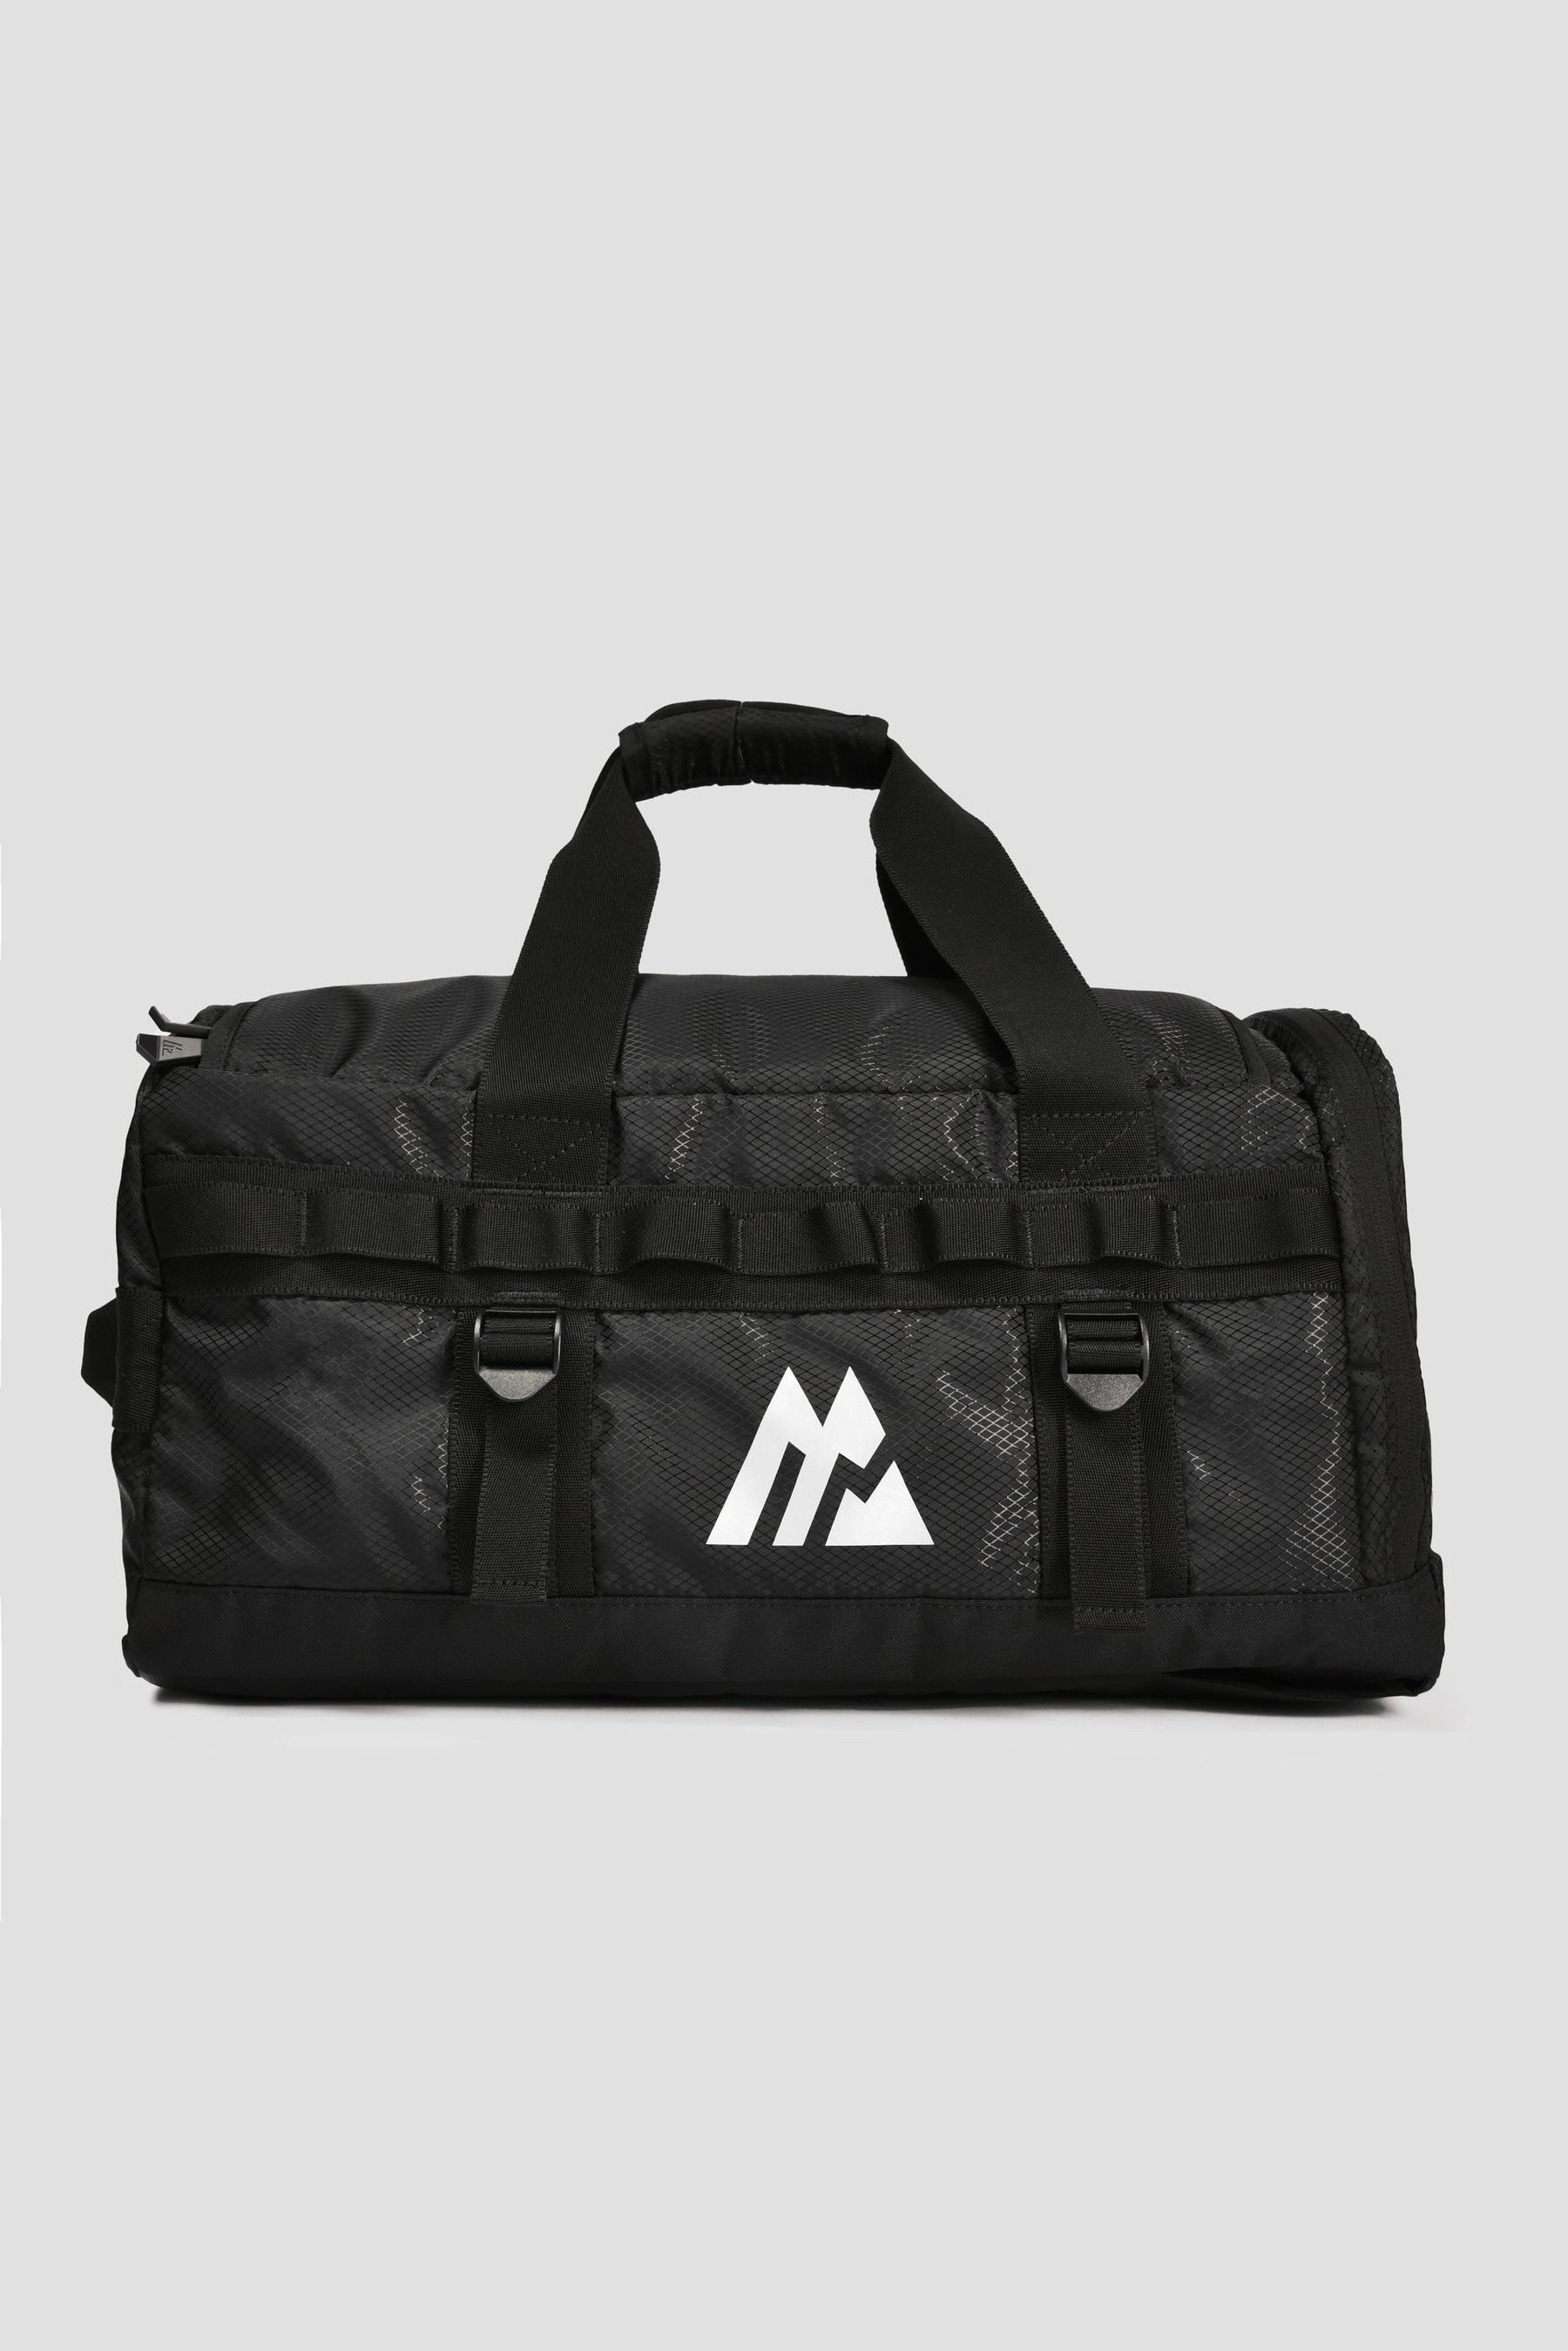 MTX 32L Duffle Bag - Black